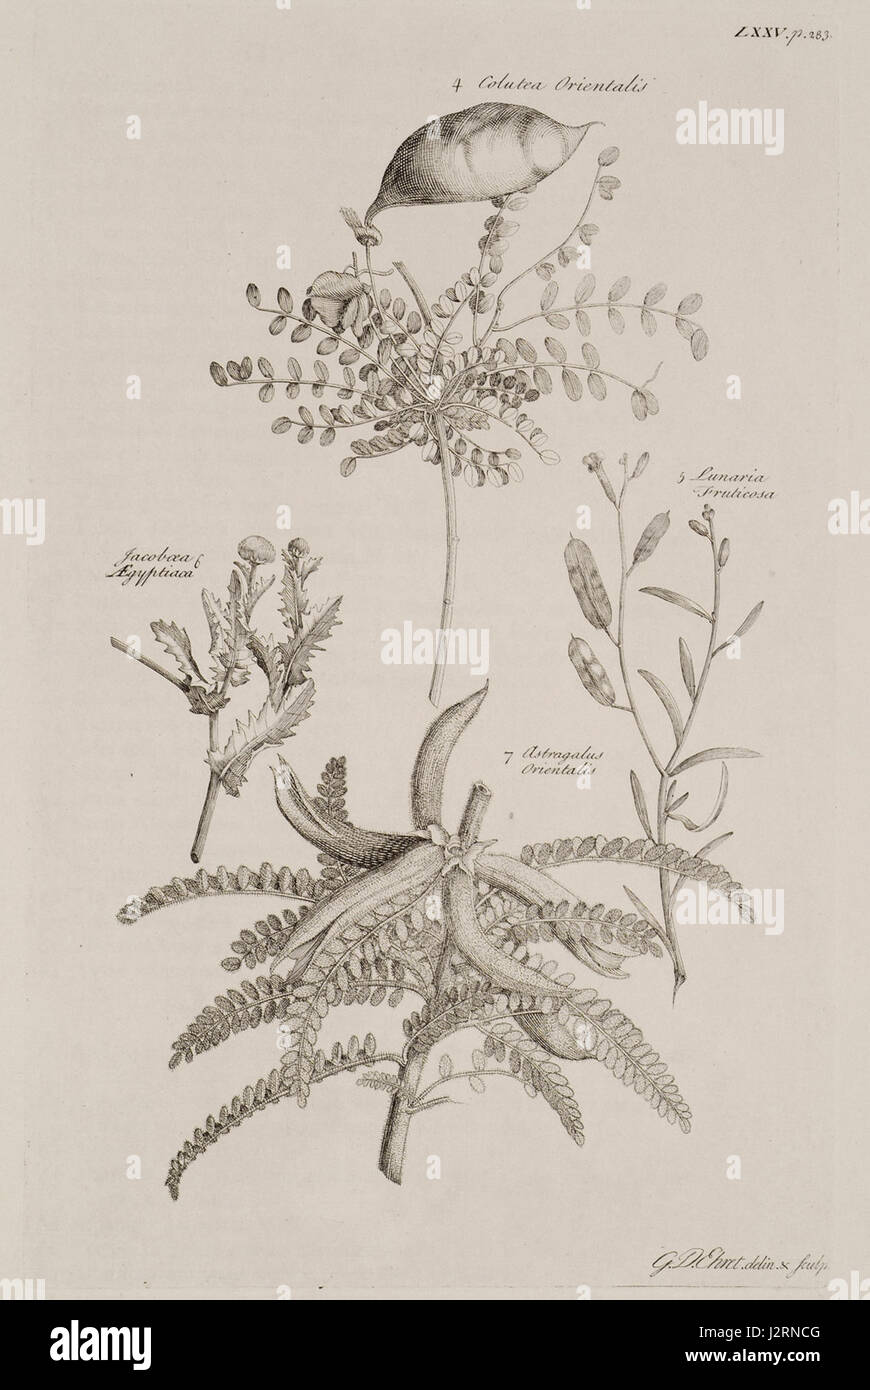 4 Colutea orientalis 5 Lunaria Fruticosa 6 Jacoboea Aegyptiaca 7 Astragalus orientalis - Pococke Richard - 1743 Stock Photo